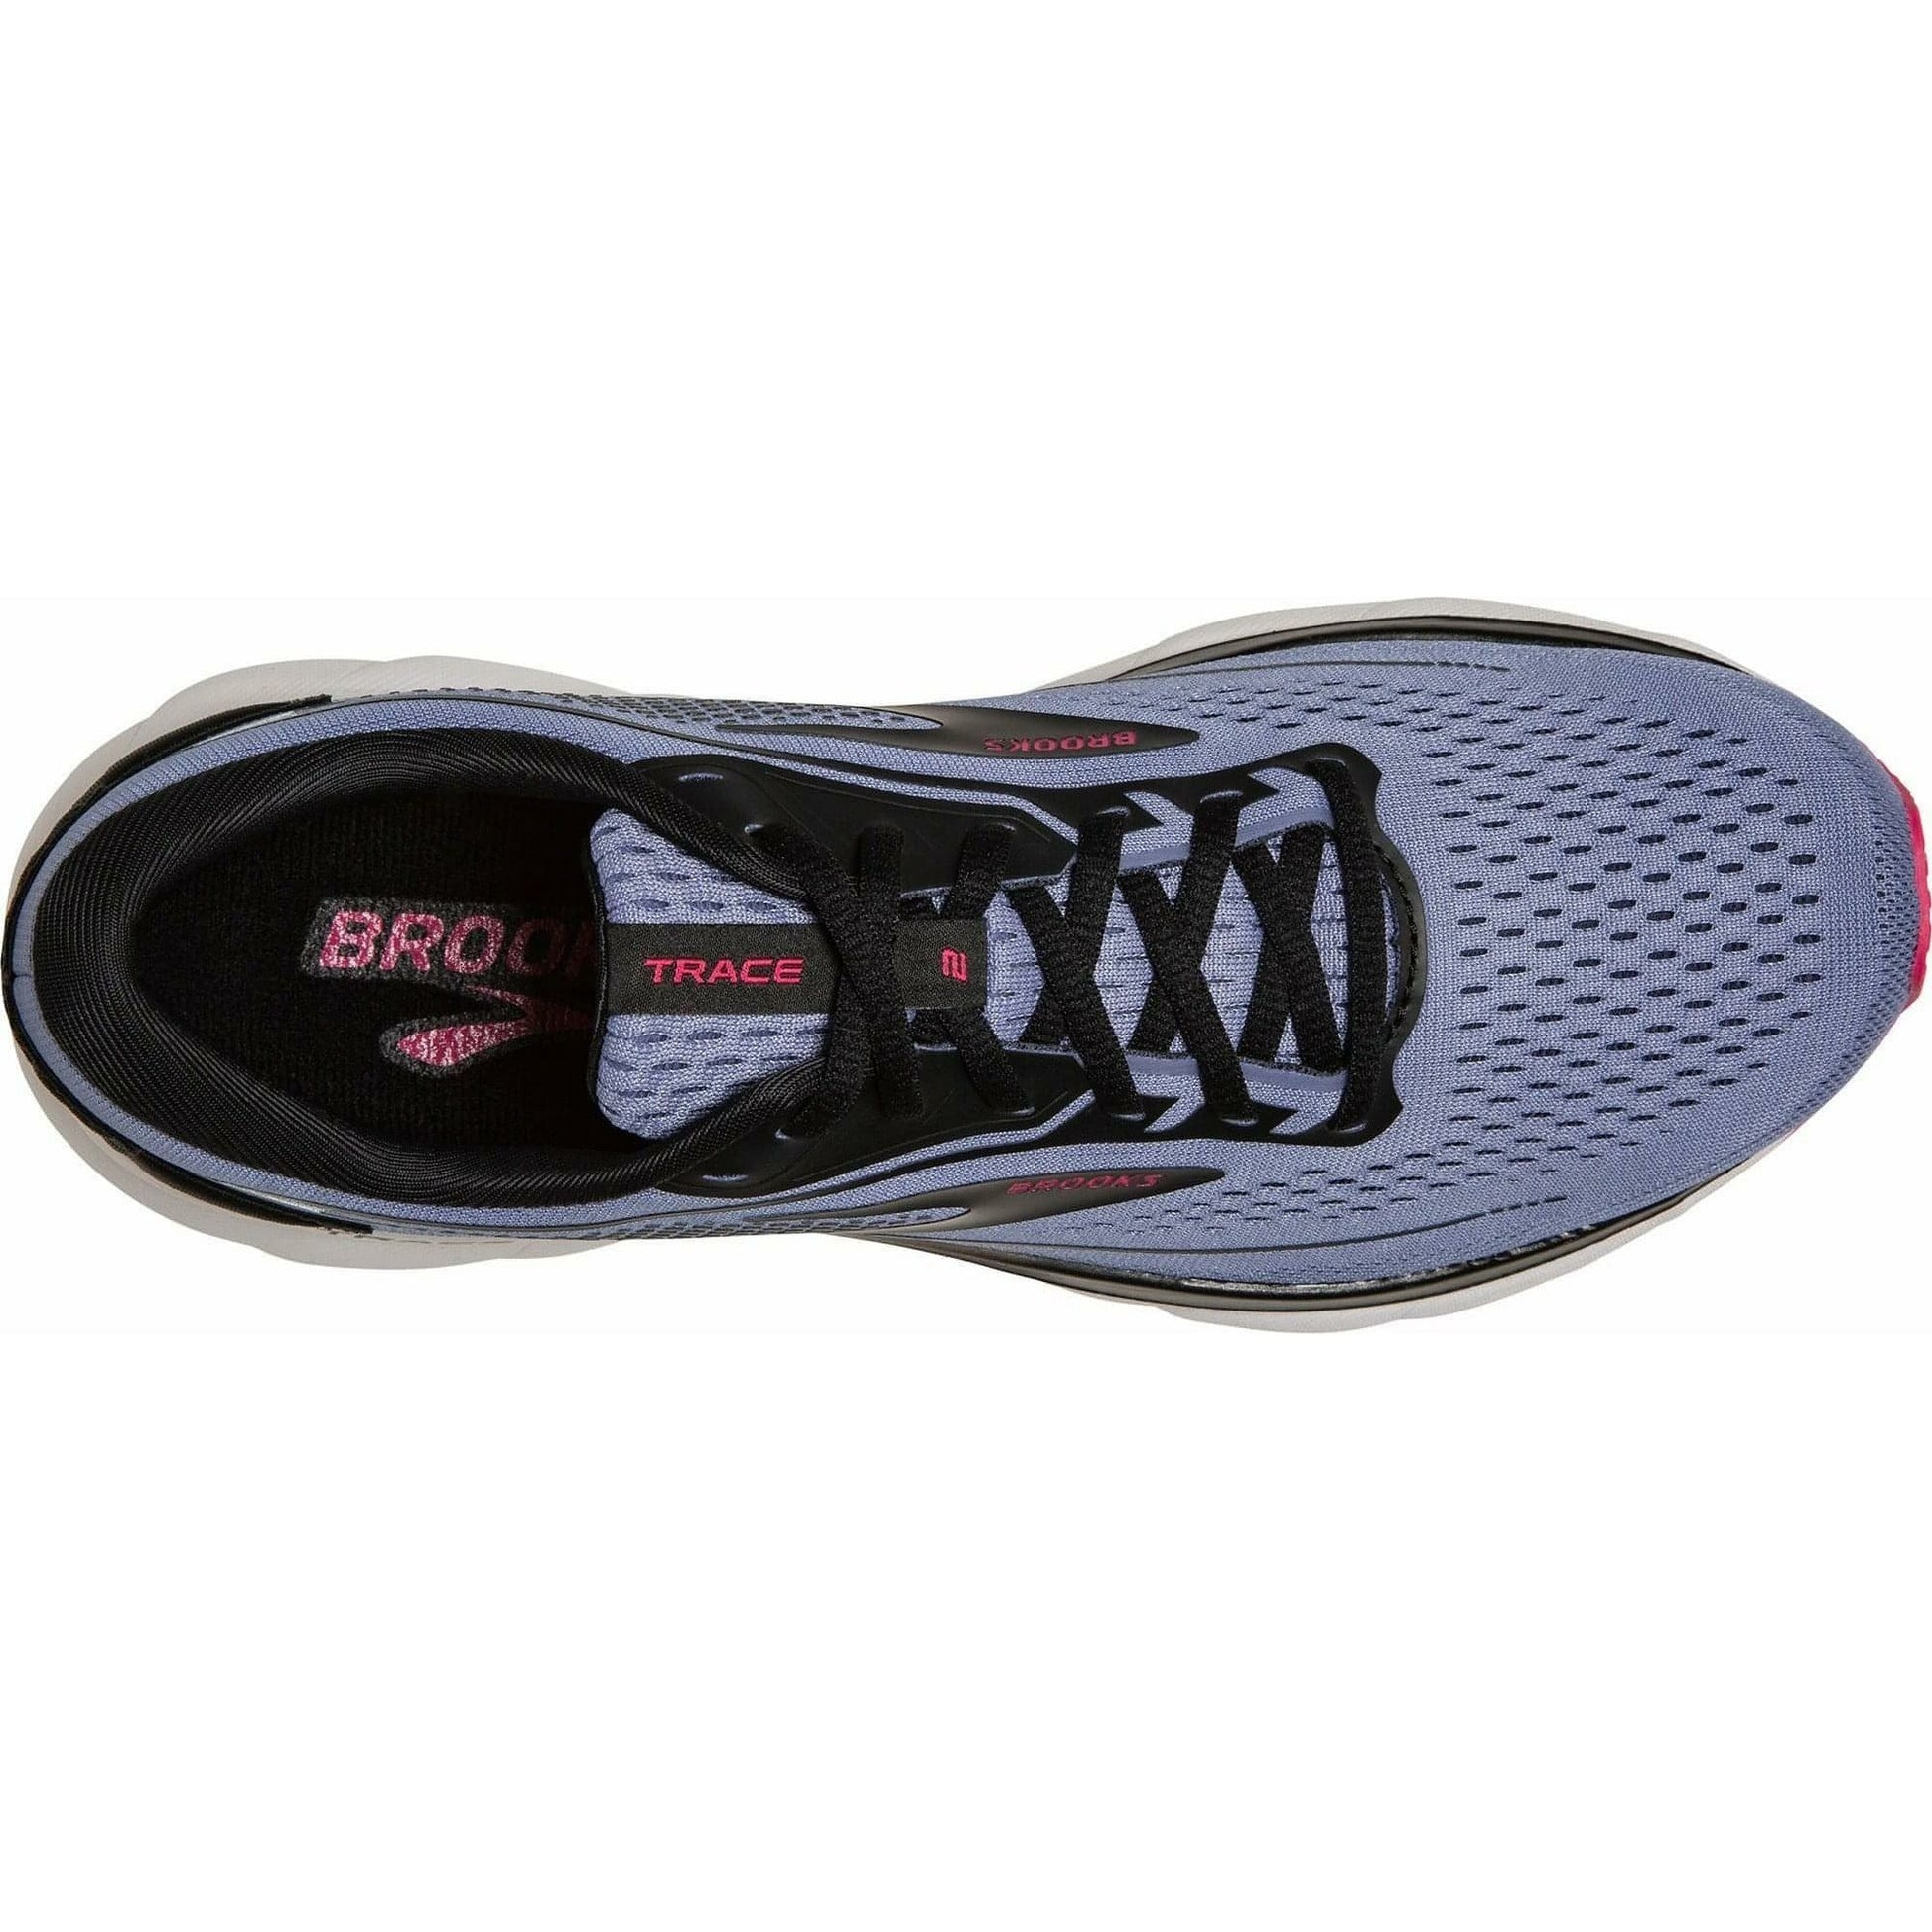 Brooks Trace 2 Womens Running Shoes - Purple - Start Fitness